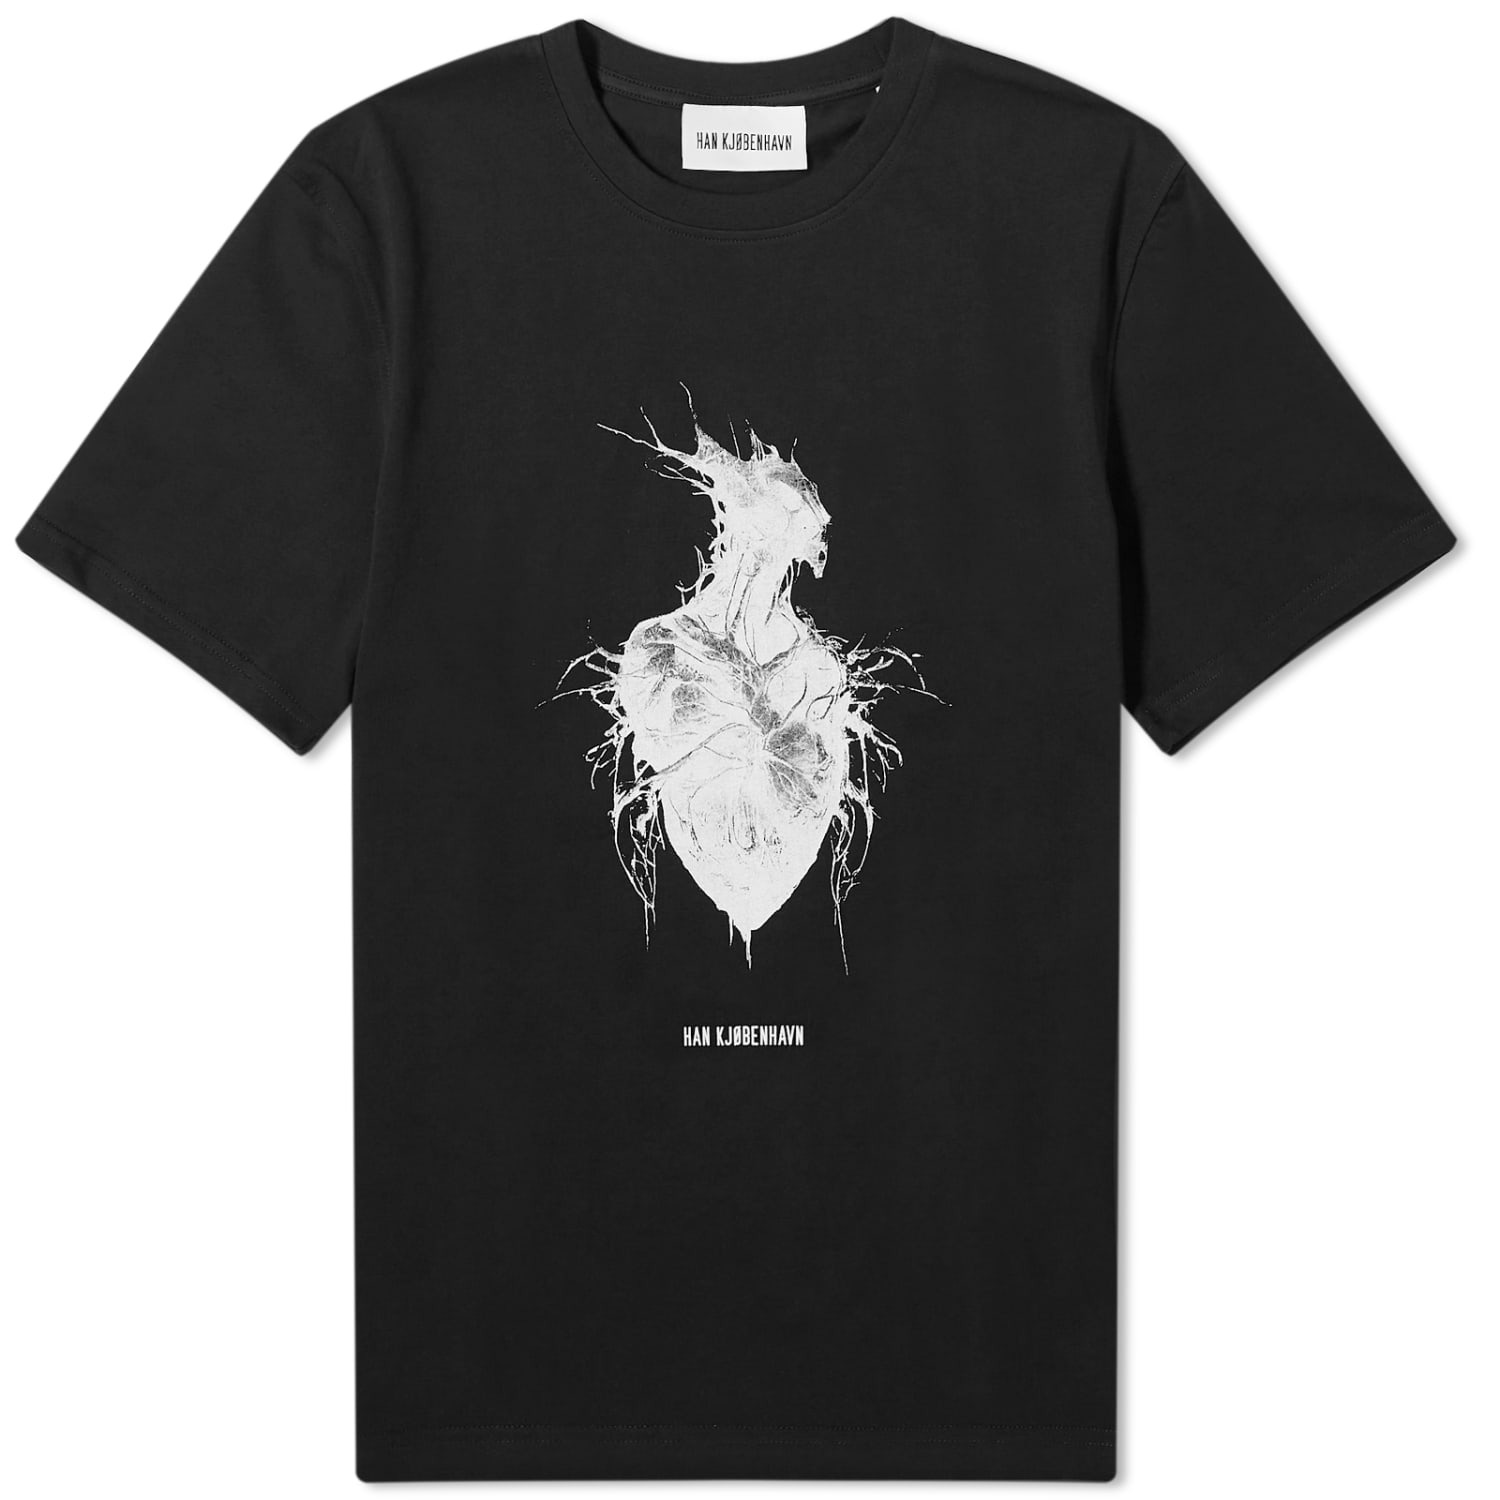 поло han kjobenhavn размер s черный Футболка Han Kjobenhavn Heart Monster Print, черный